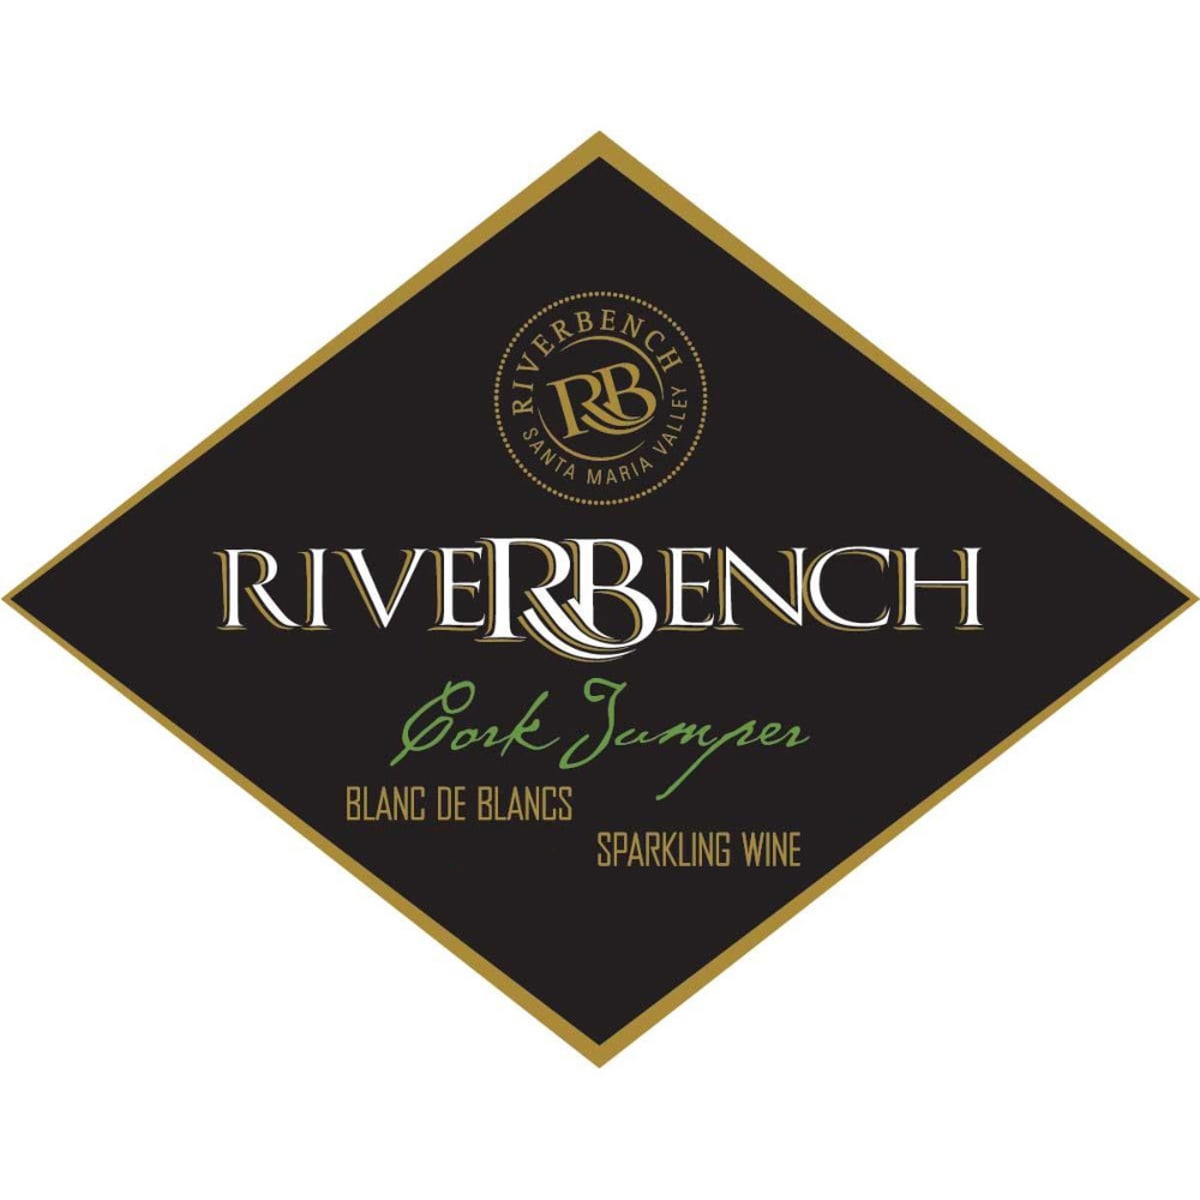 Riverbench Cork Jumper Blanc de Blancs 2013 Front Label